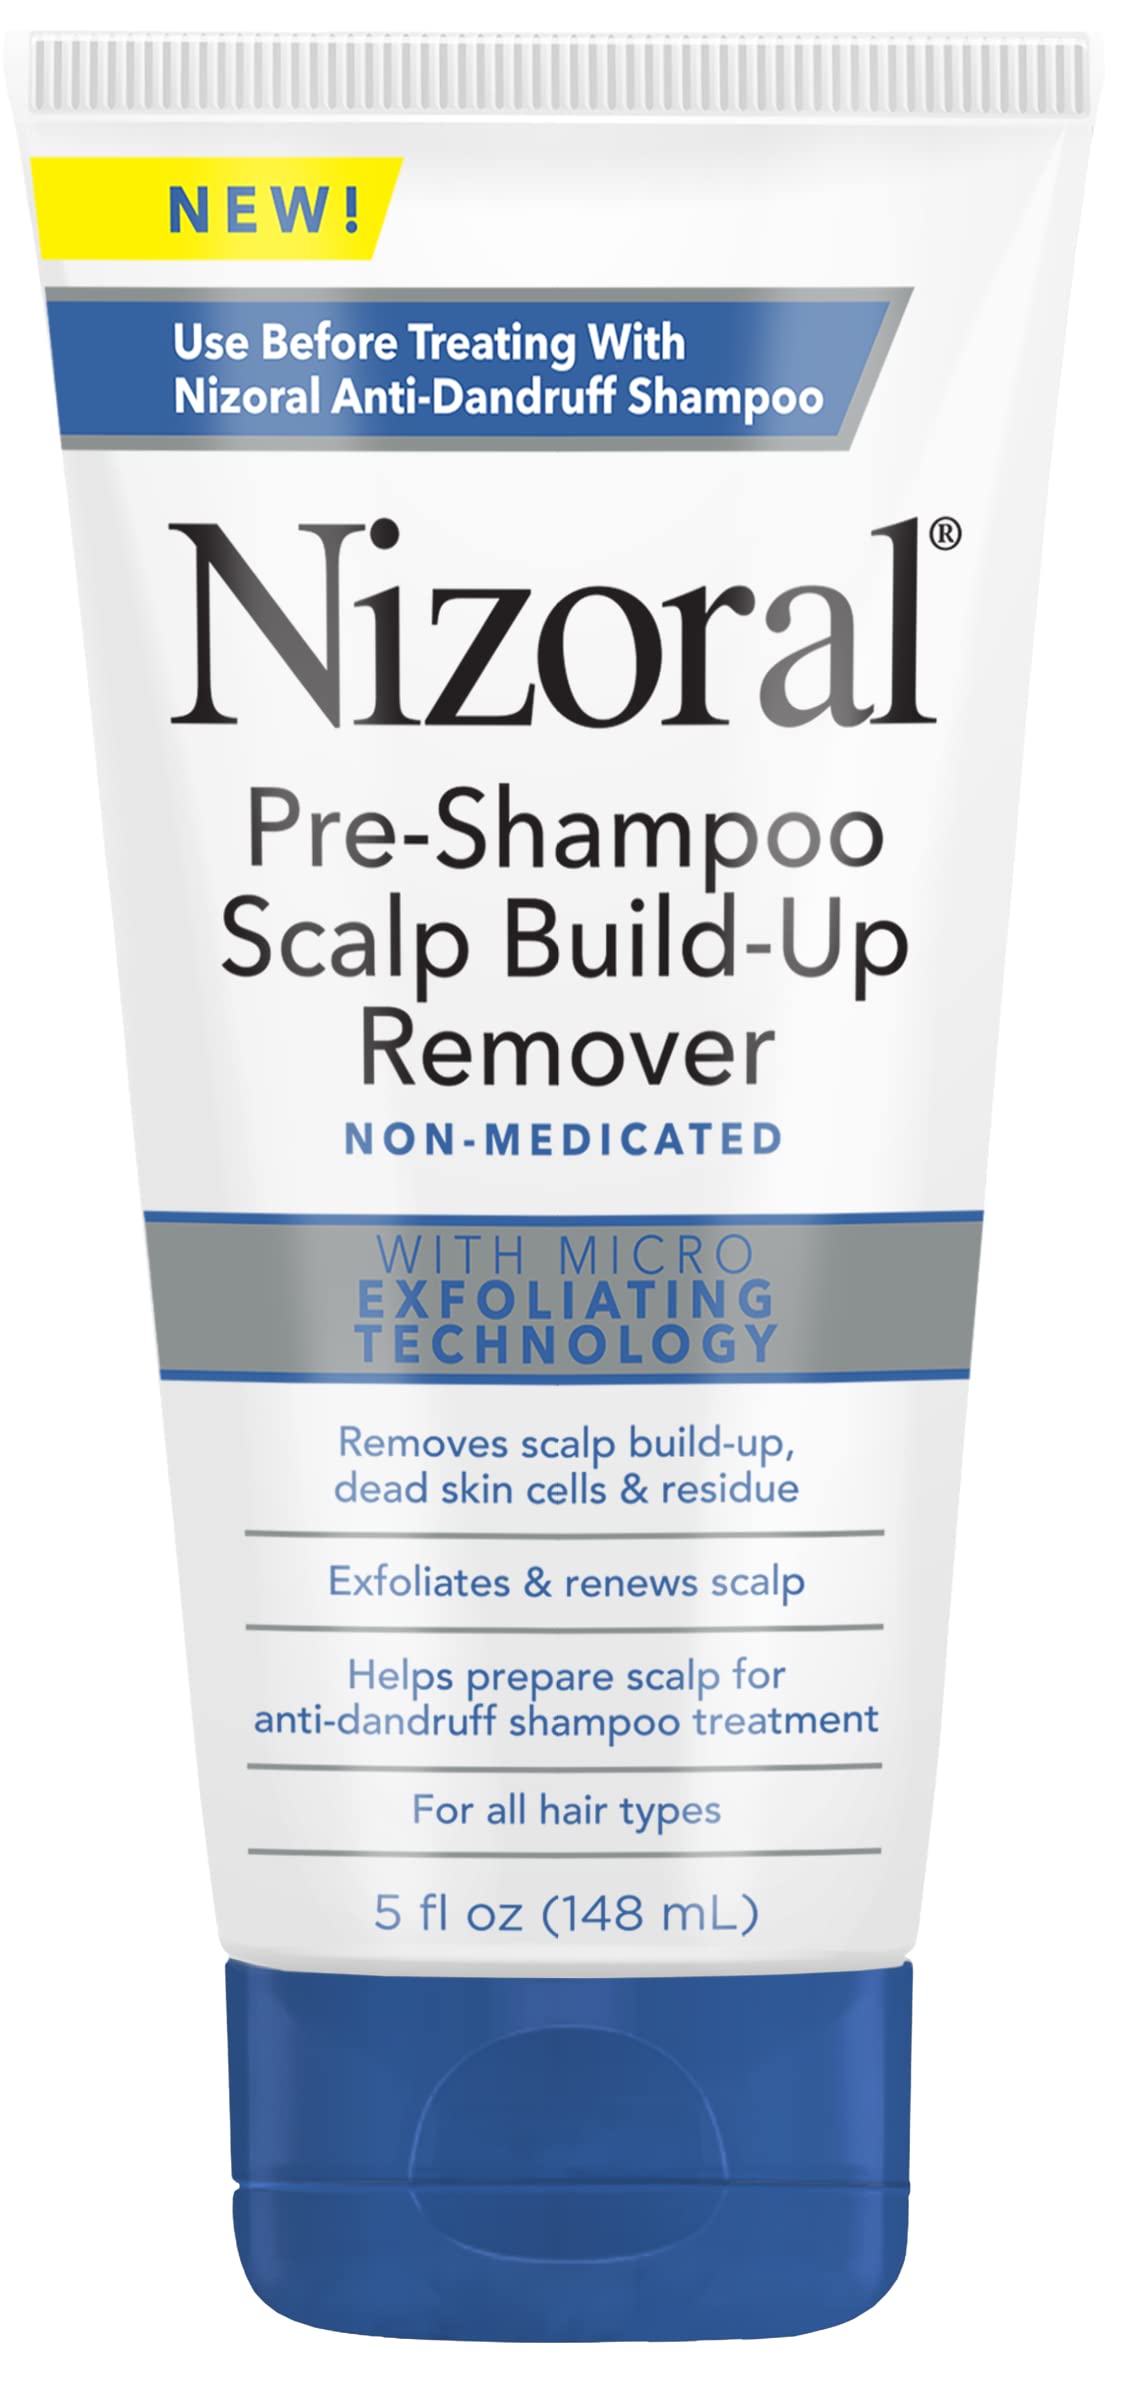 Nizoral Pre-Shampoo Scalp Build-Up Remover - Exfoliates and Renews Helps Prepare for Anti-Dandruff Shampoo Treatment, 5 oz